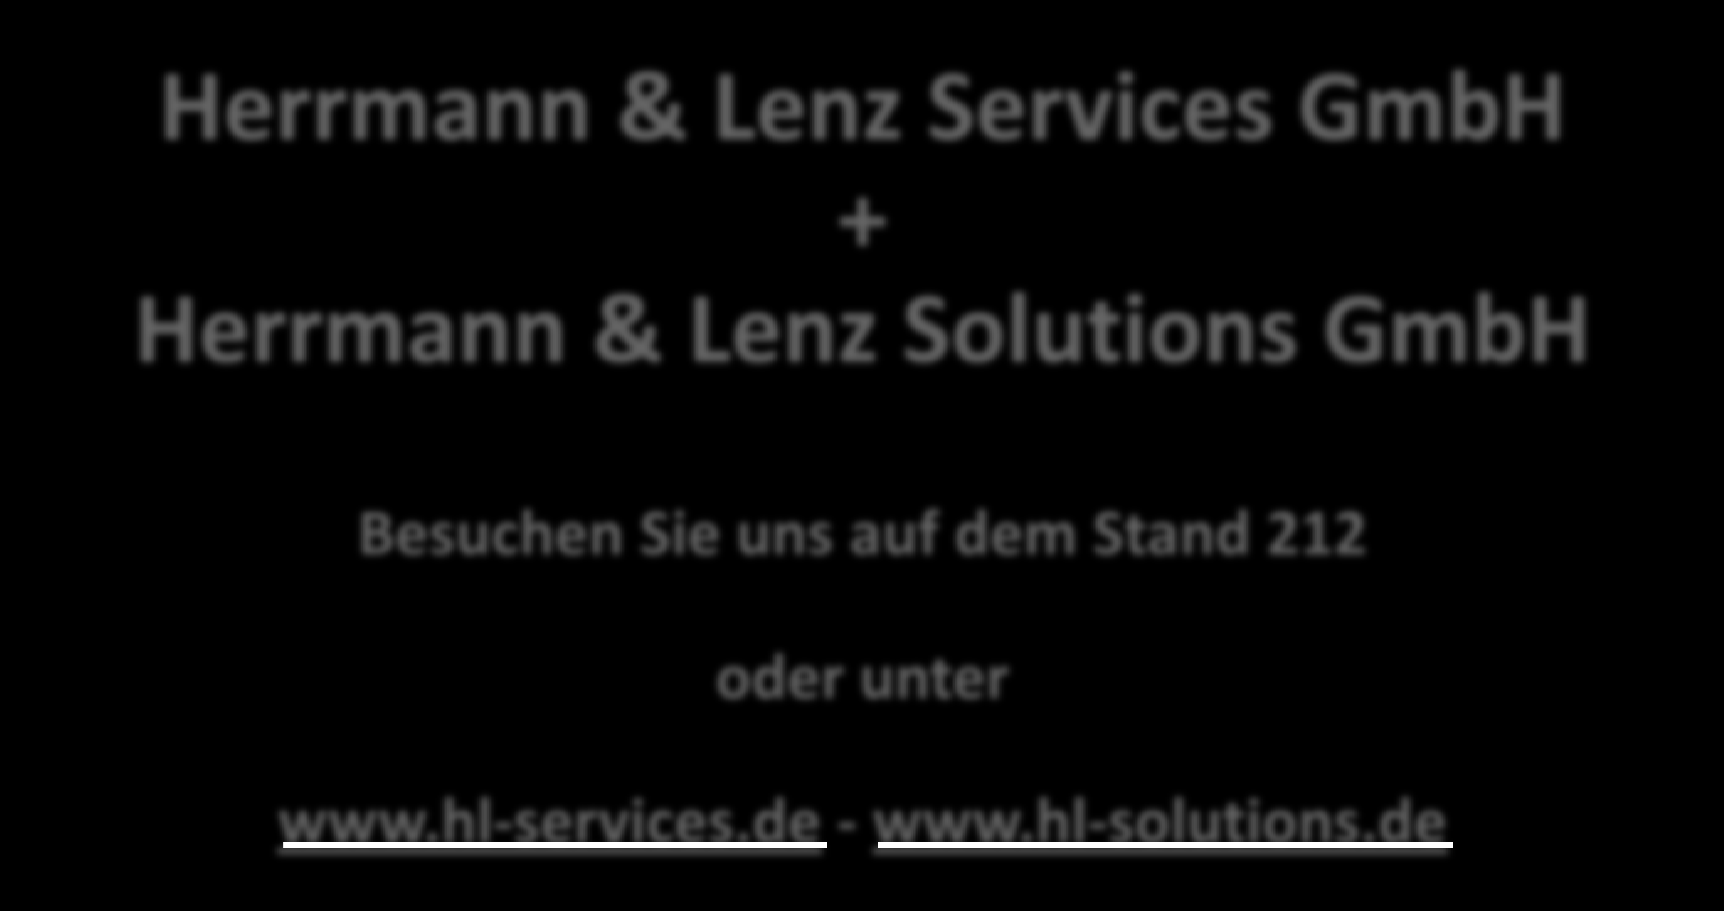 Herrmann & Lenz Services GmbH + Herrmann & Lenz Solutions GmbH Besuchen